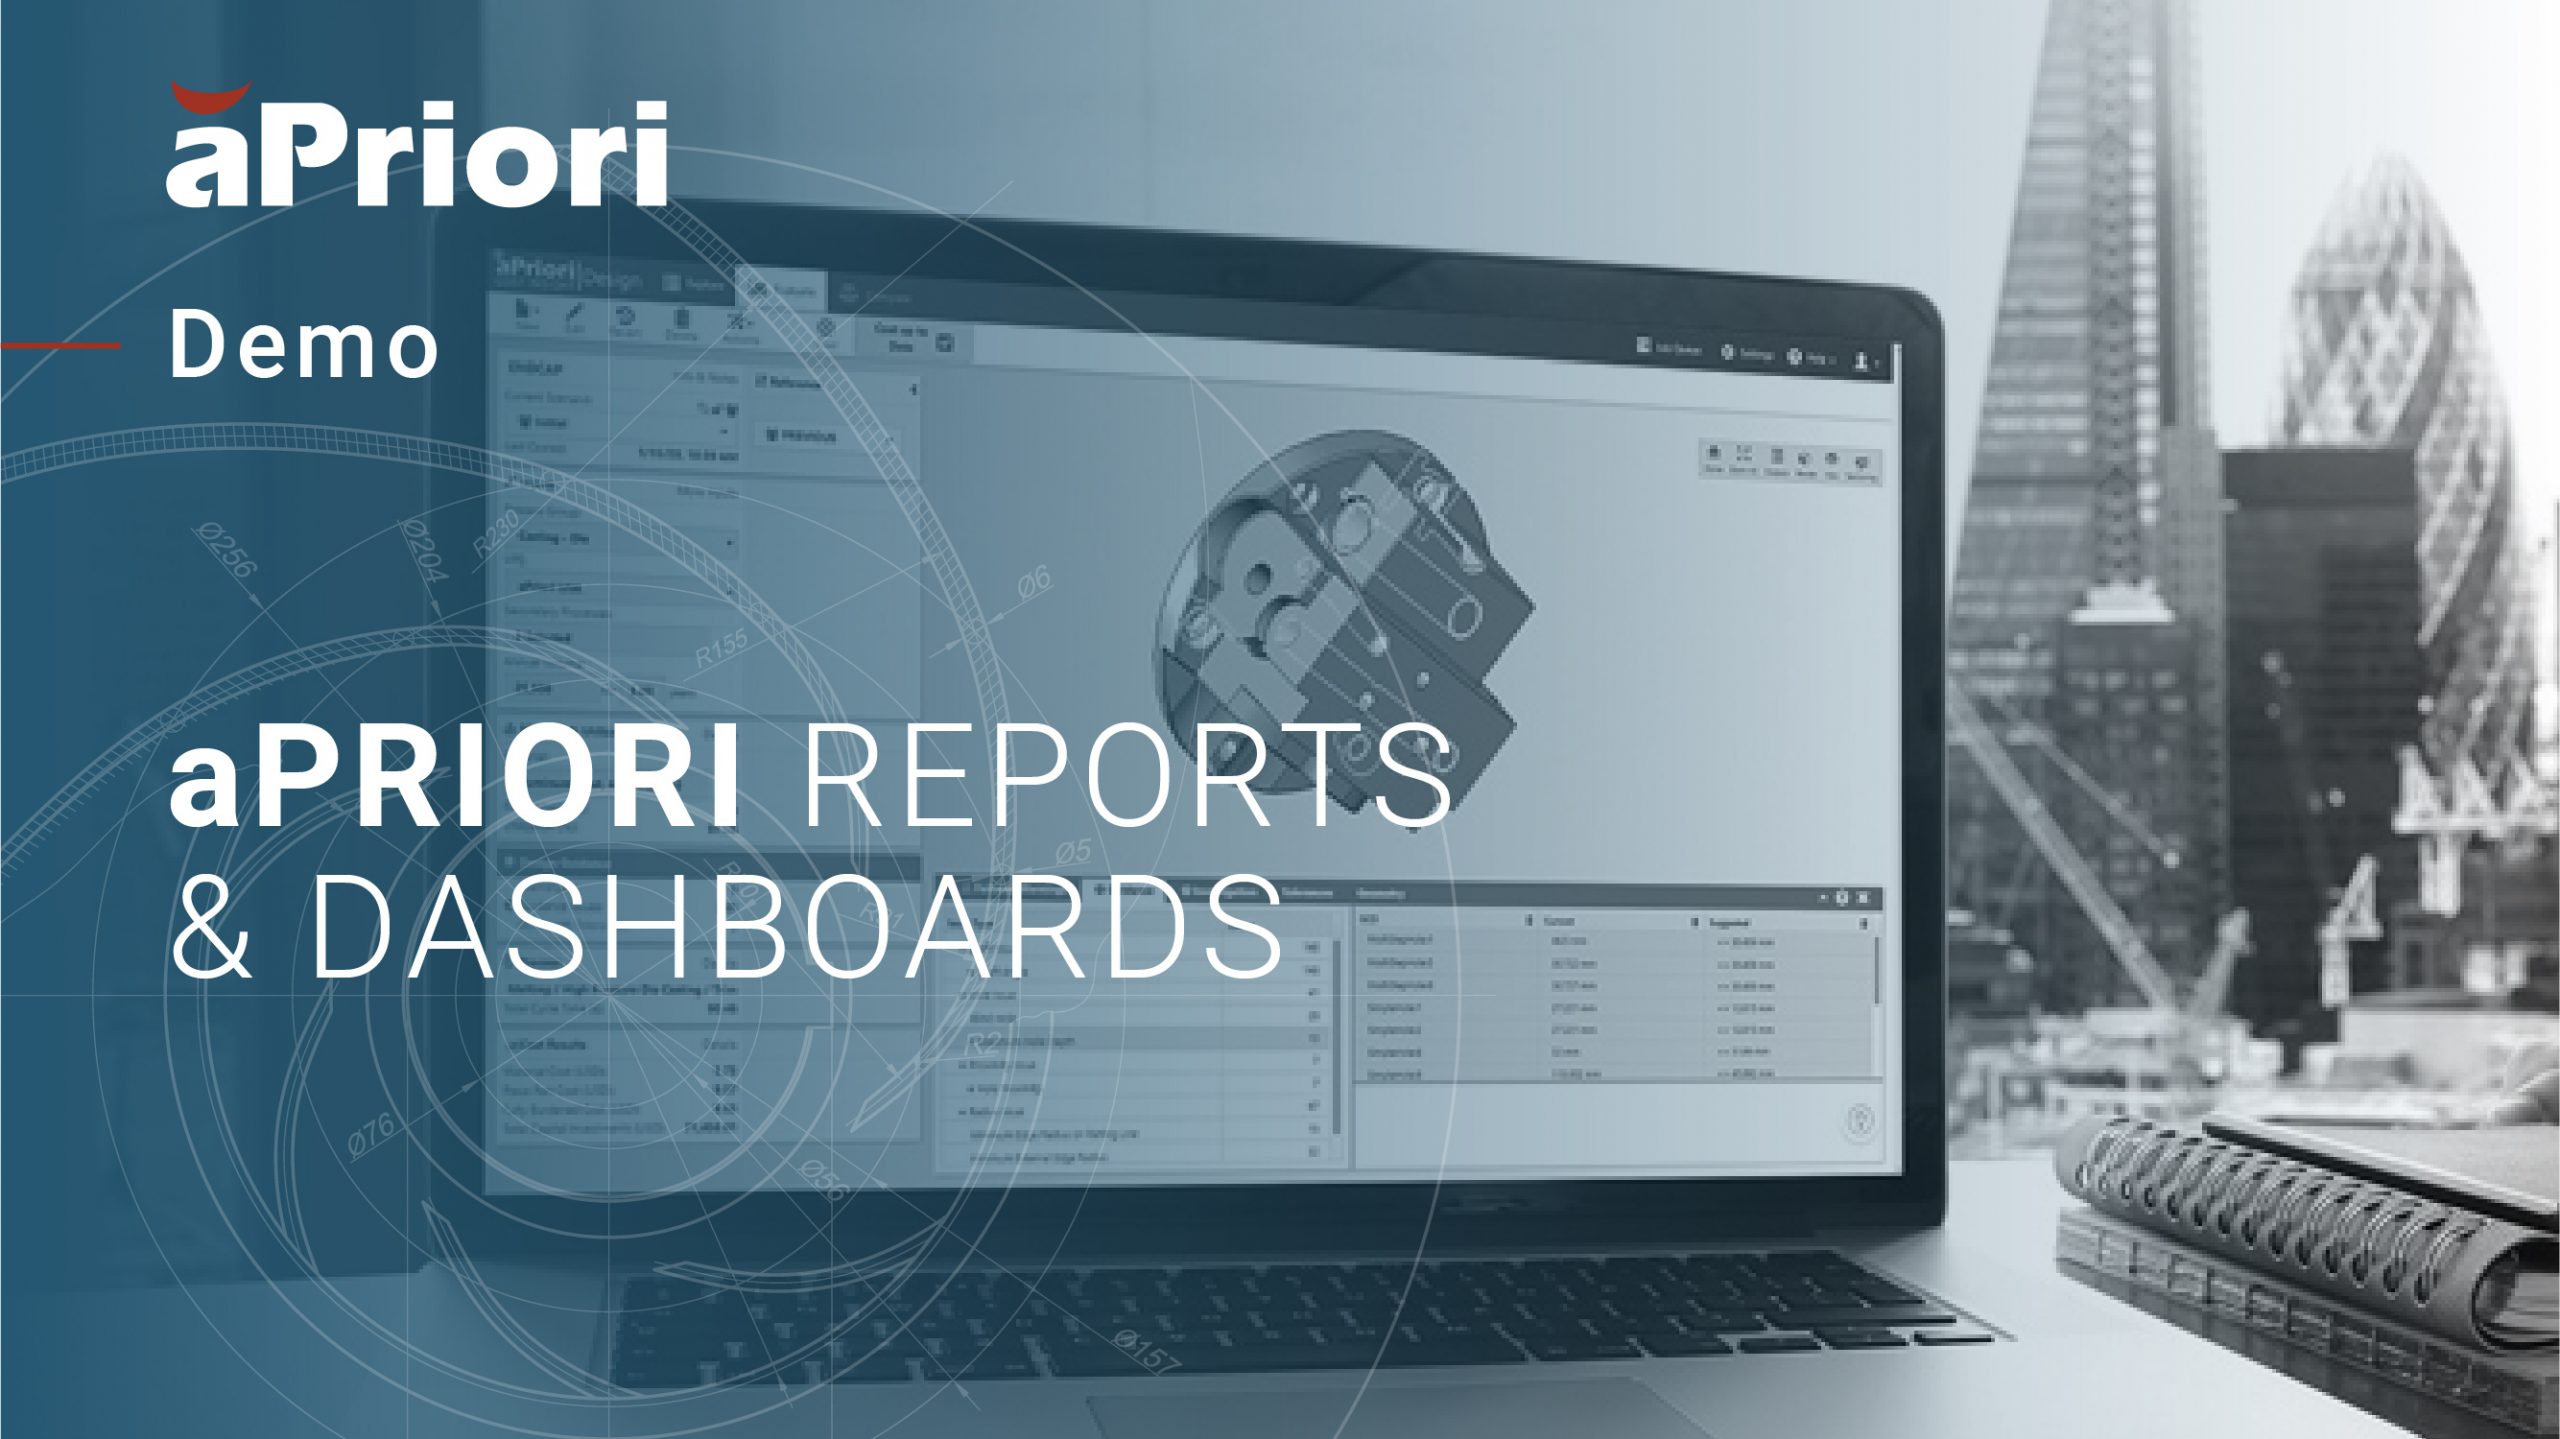 aPriori’s Reports and Dashboard Capabilities